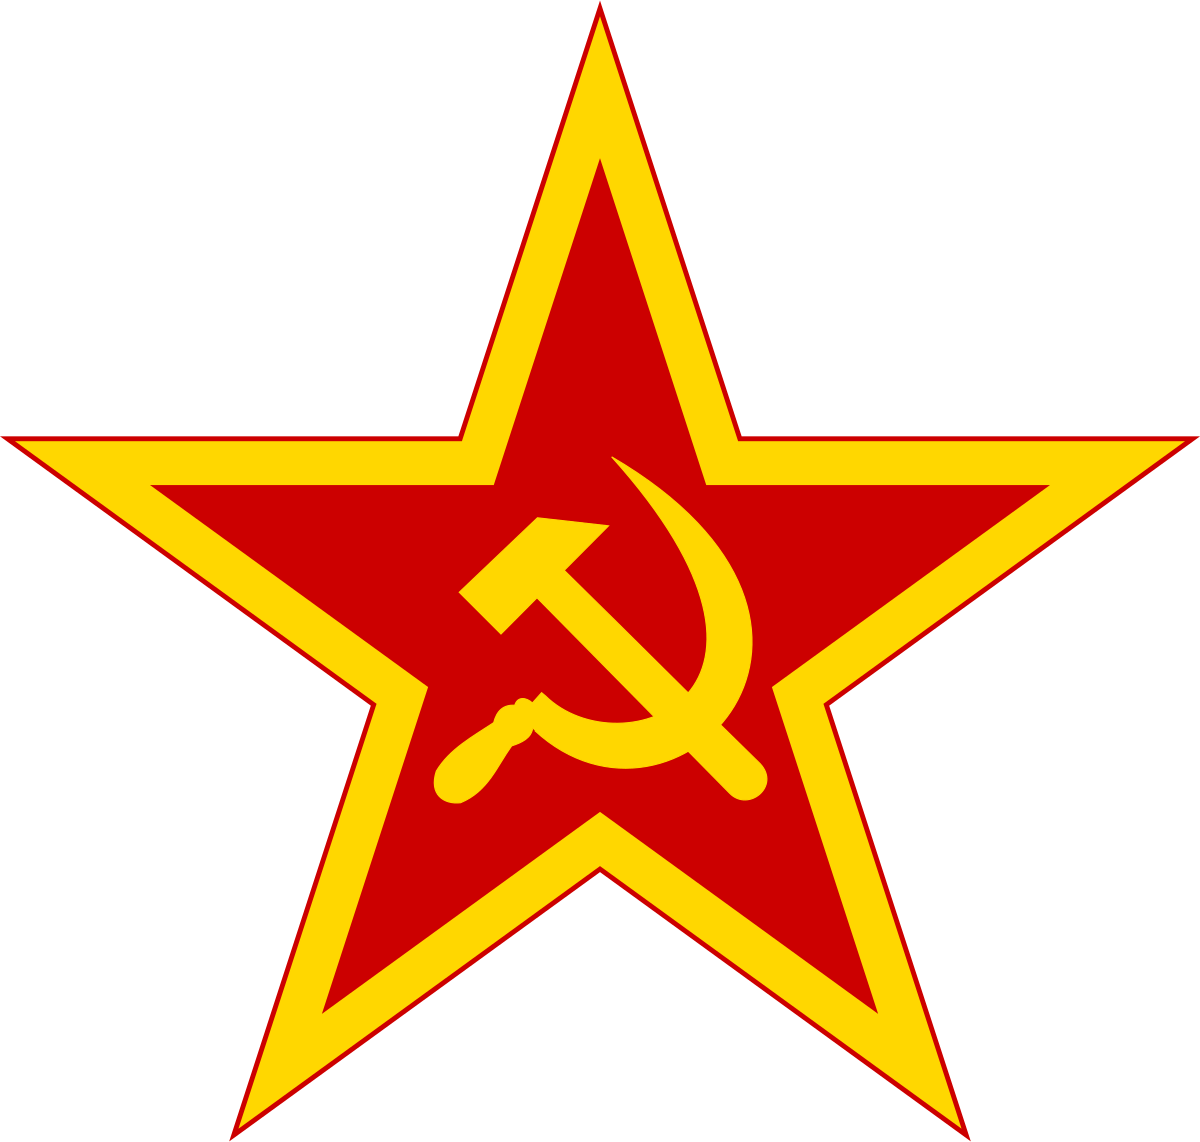 Chinese Red Star Logo - Communist symbolism